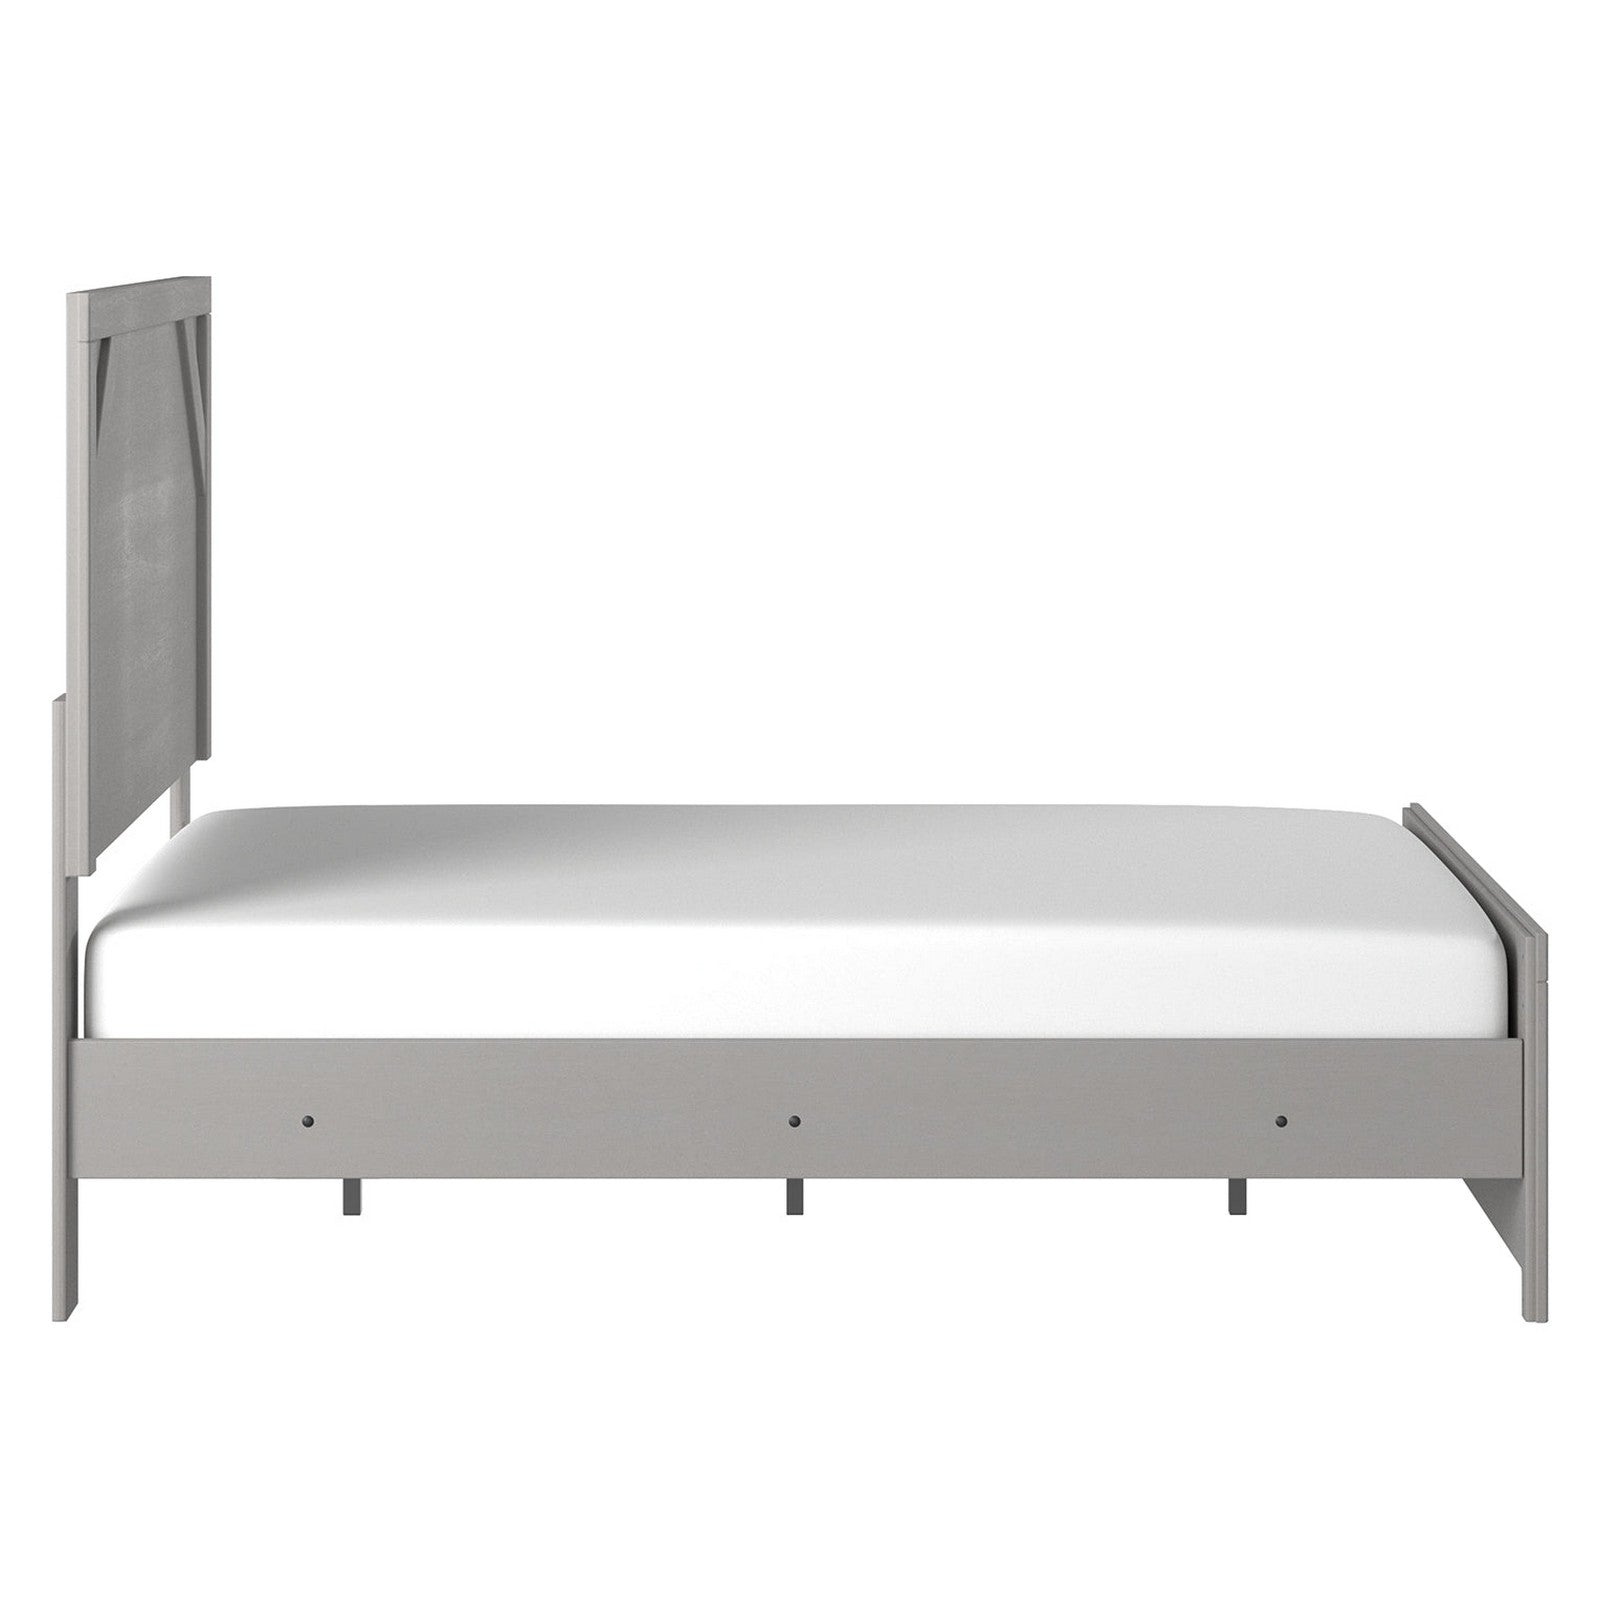 Cottonburg Panel Bed